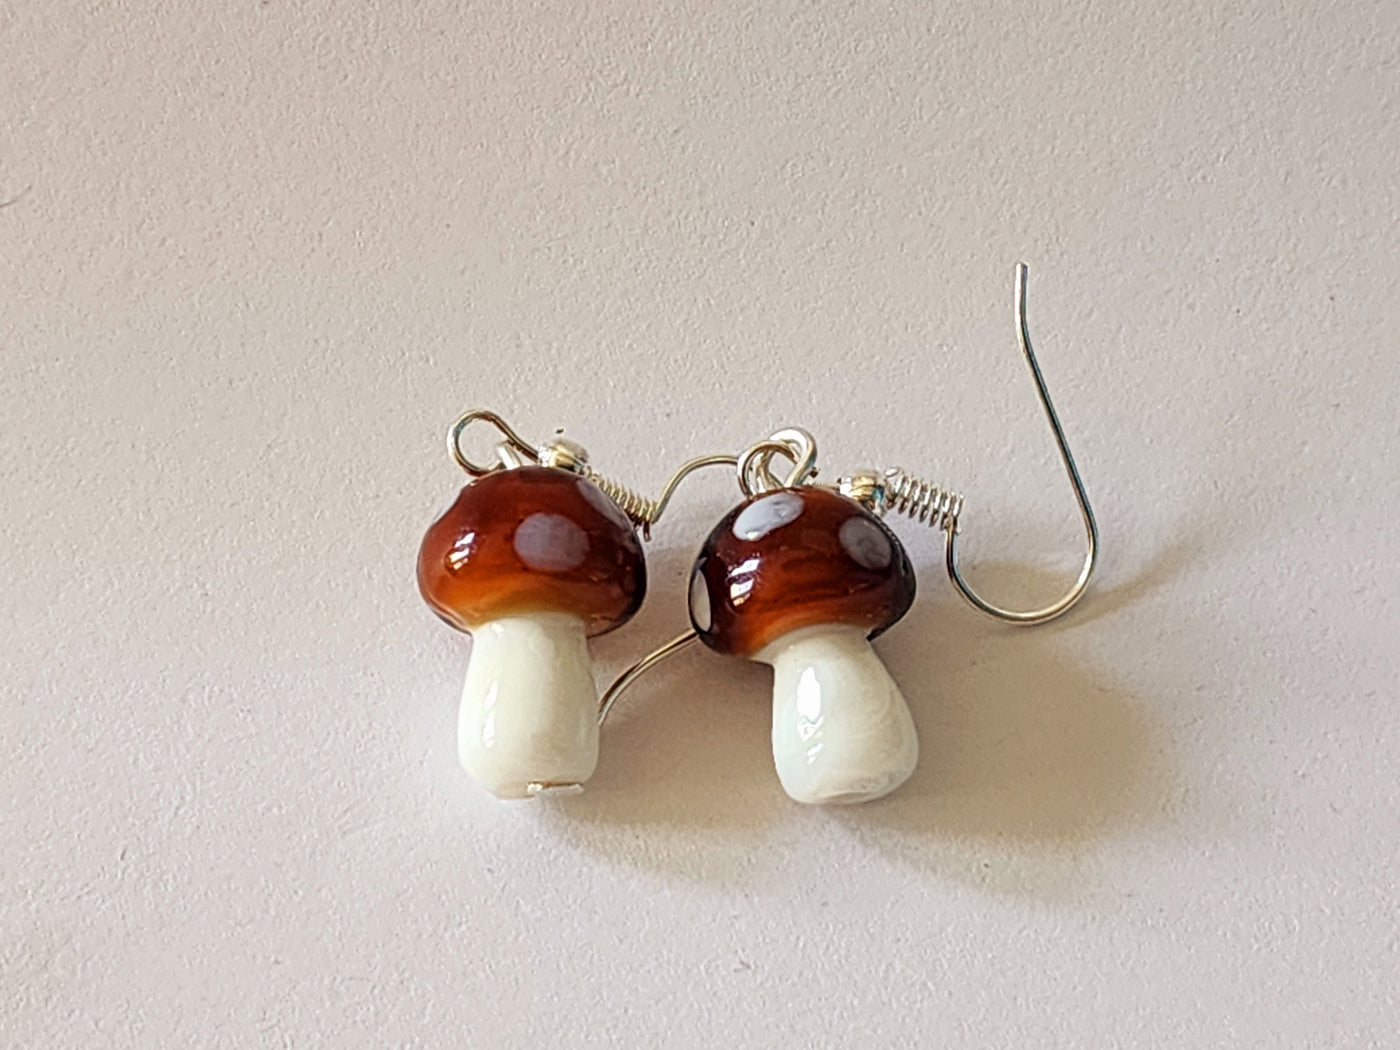 mushroom bracelets & earrings - The CAPN's Mushroom Company